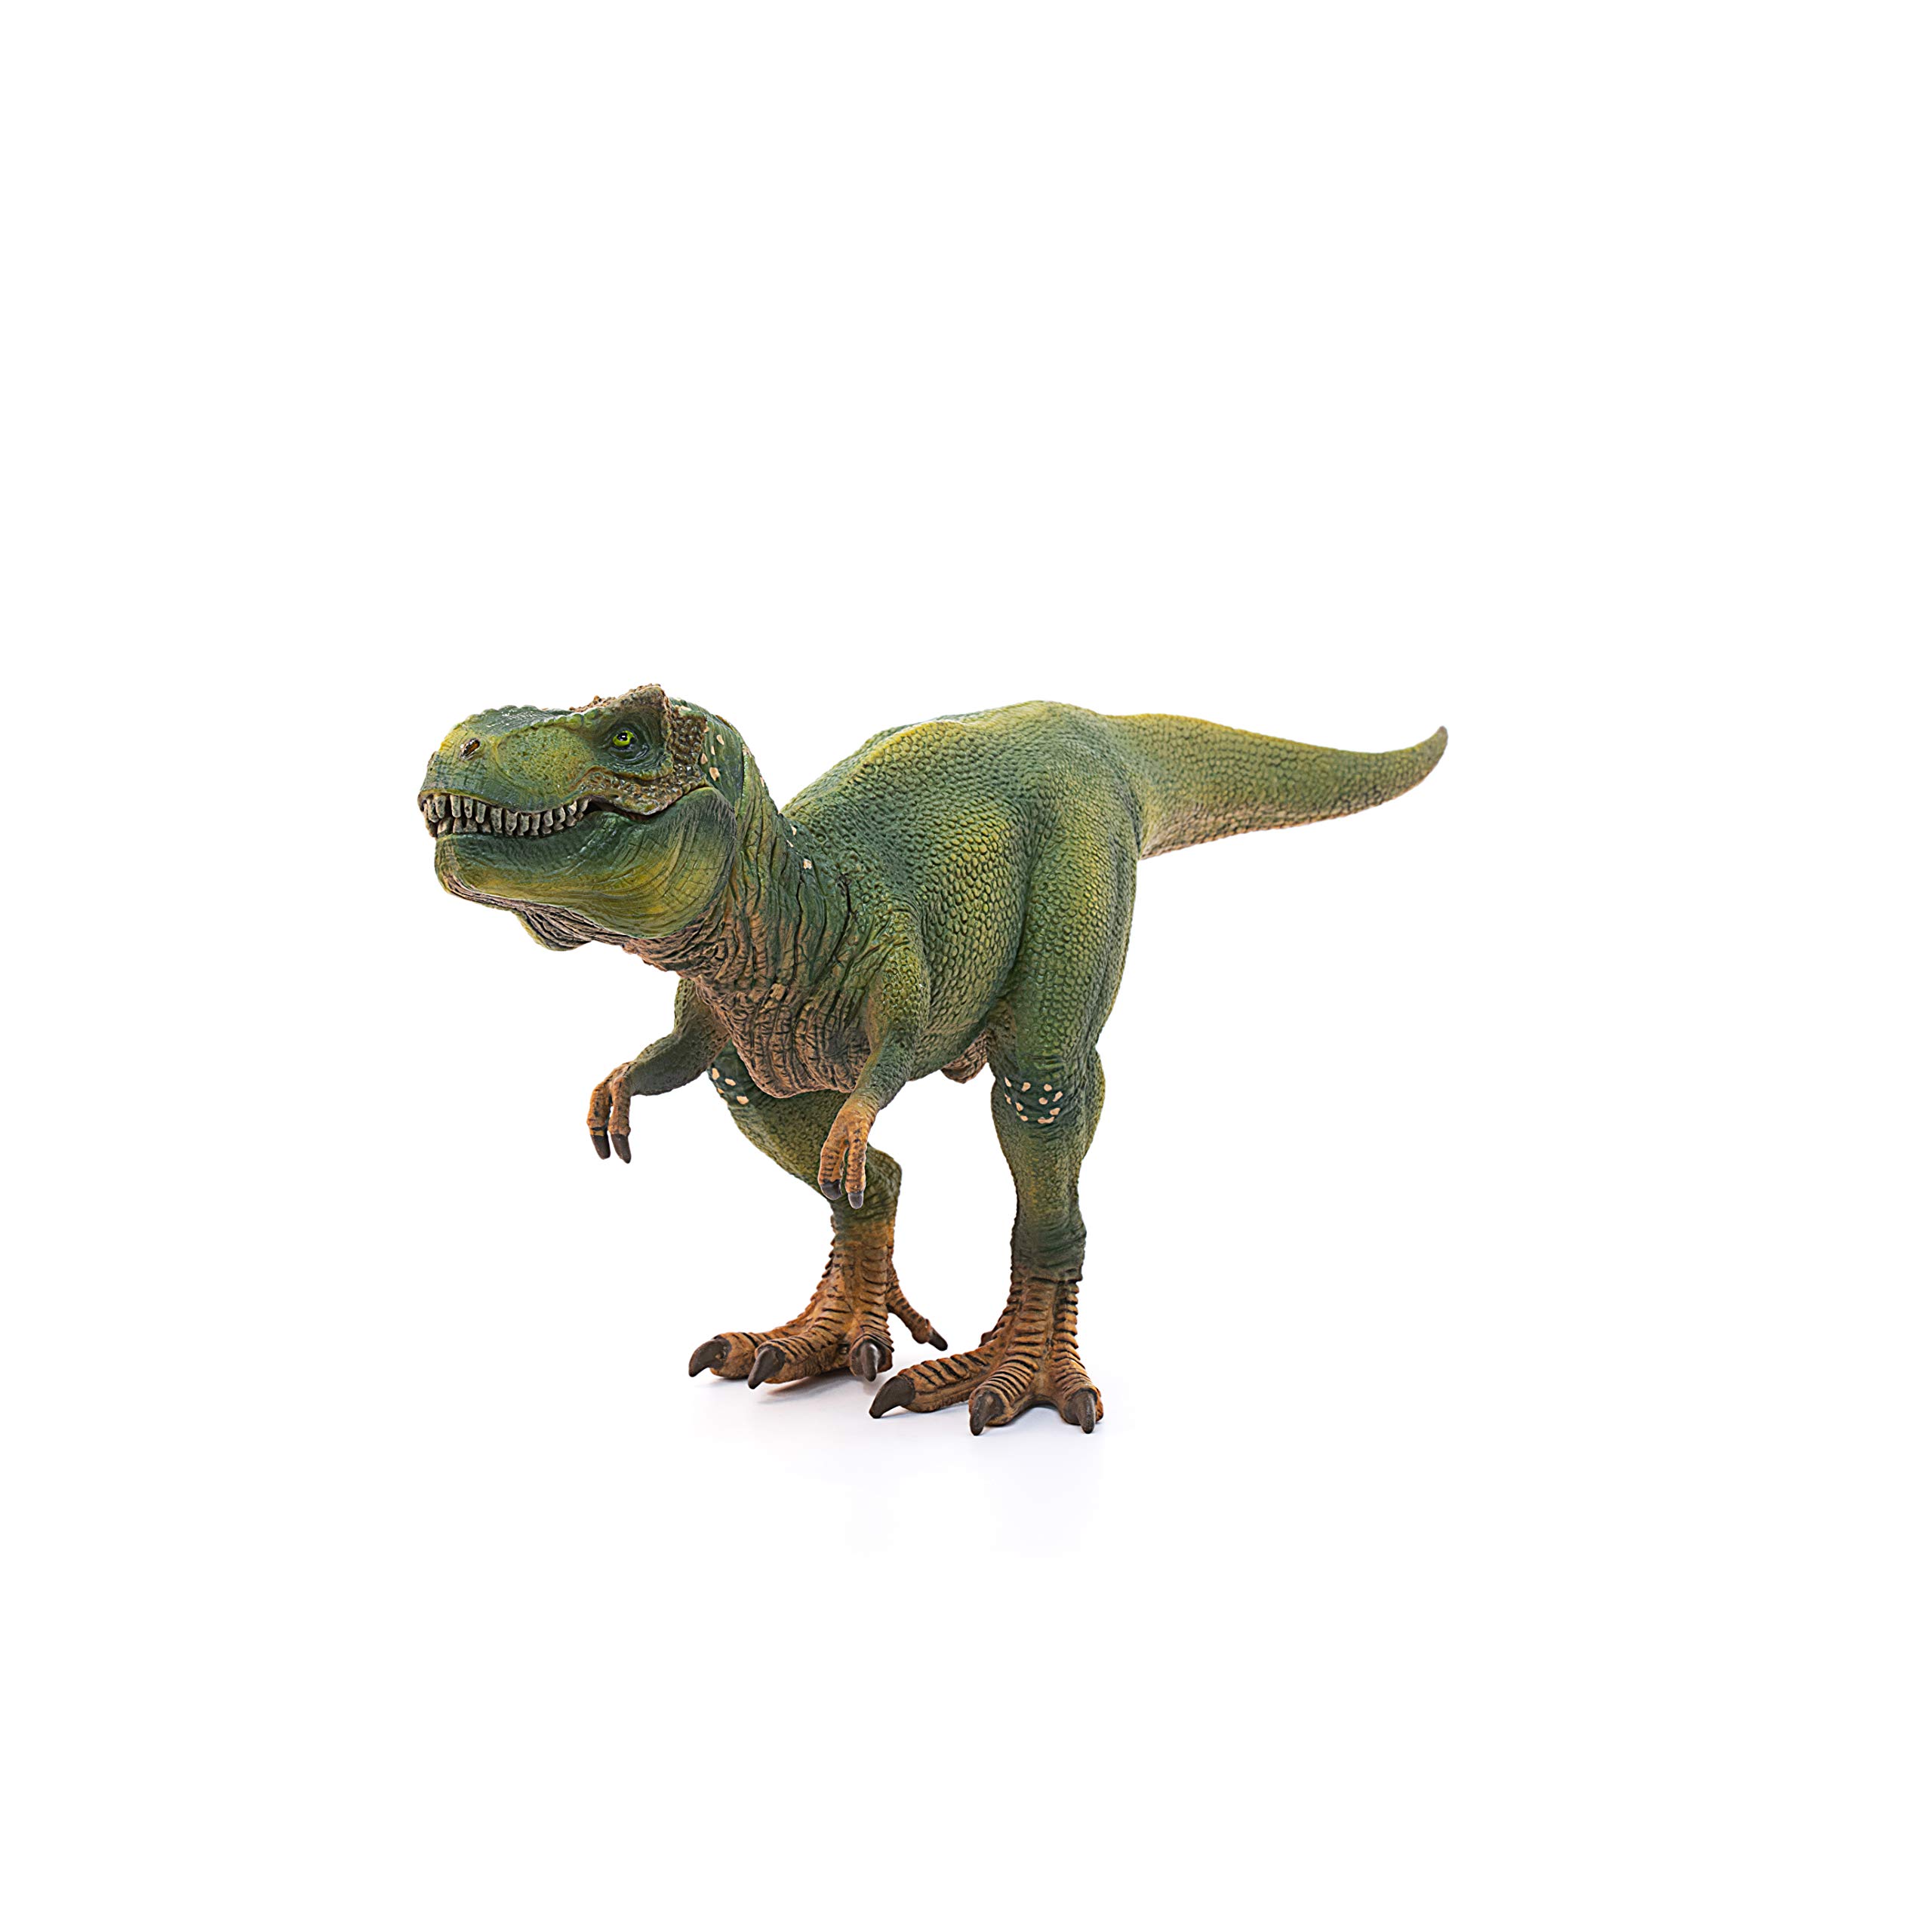 Schleich Dinosaurs, Dinosaur Toy, Dinosaur Toys for Boys and Girls 4-12 years old, Tyrannosaurus Rex, Green, 11.2